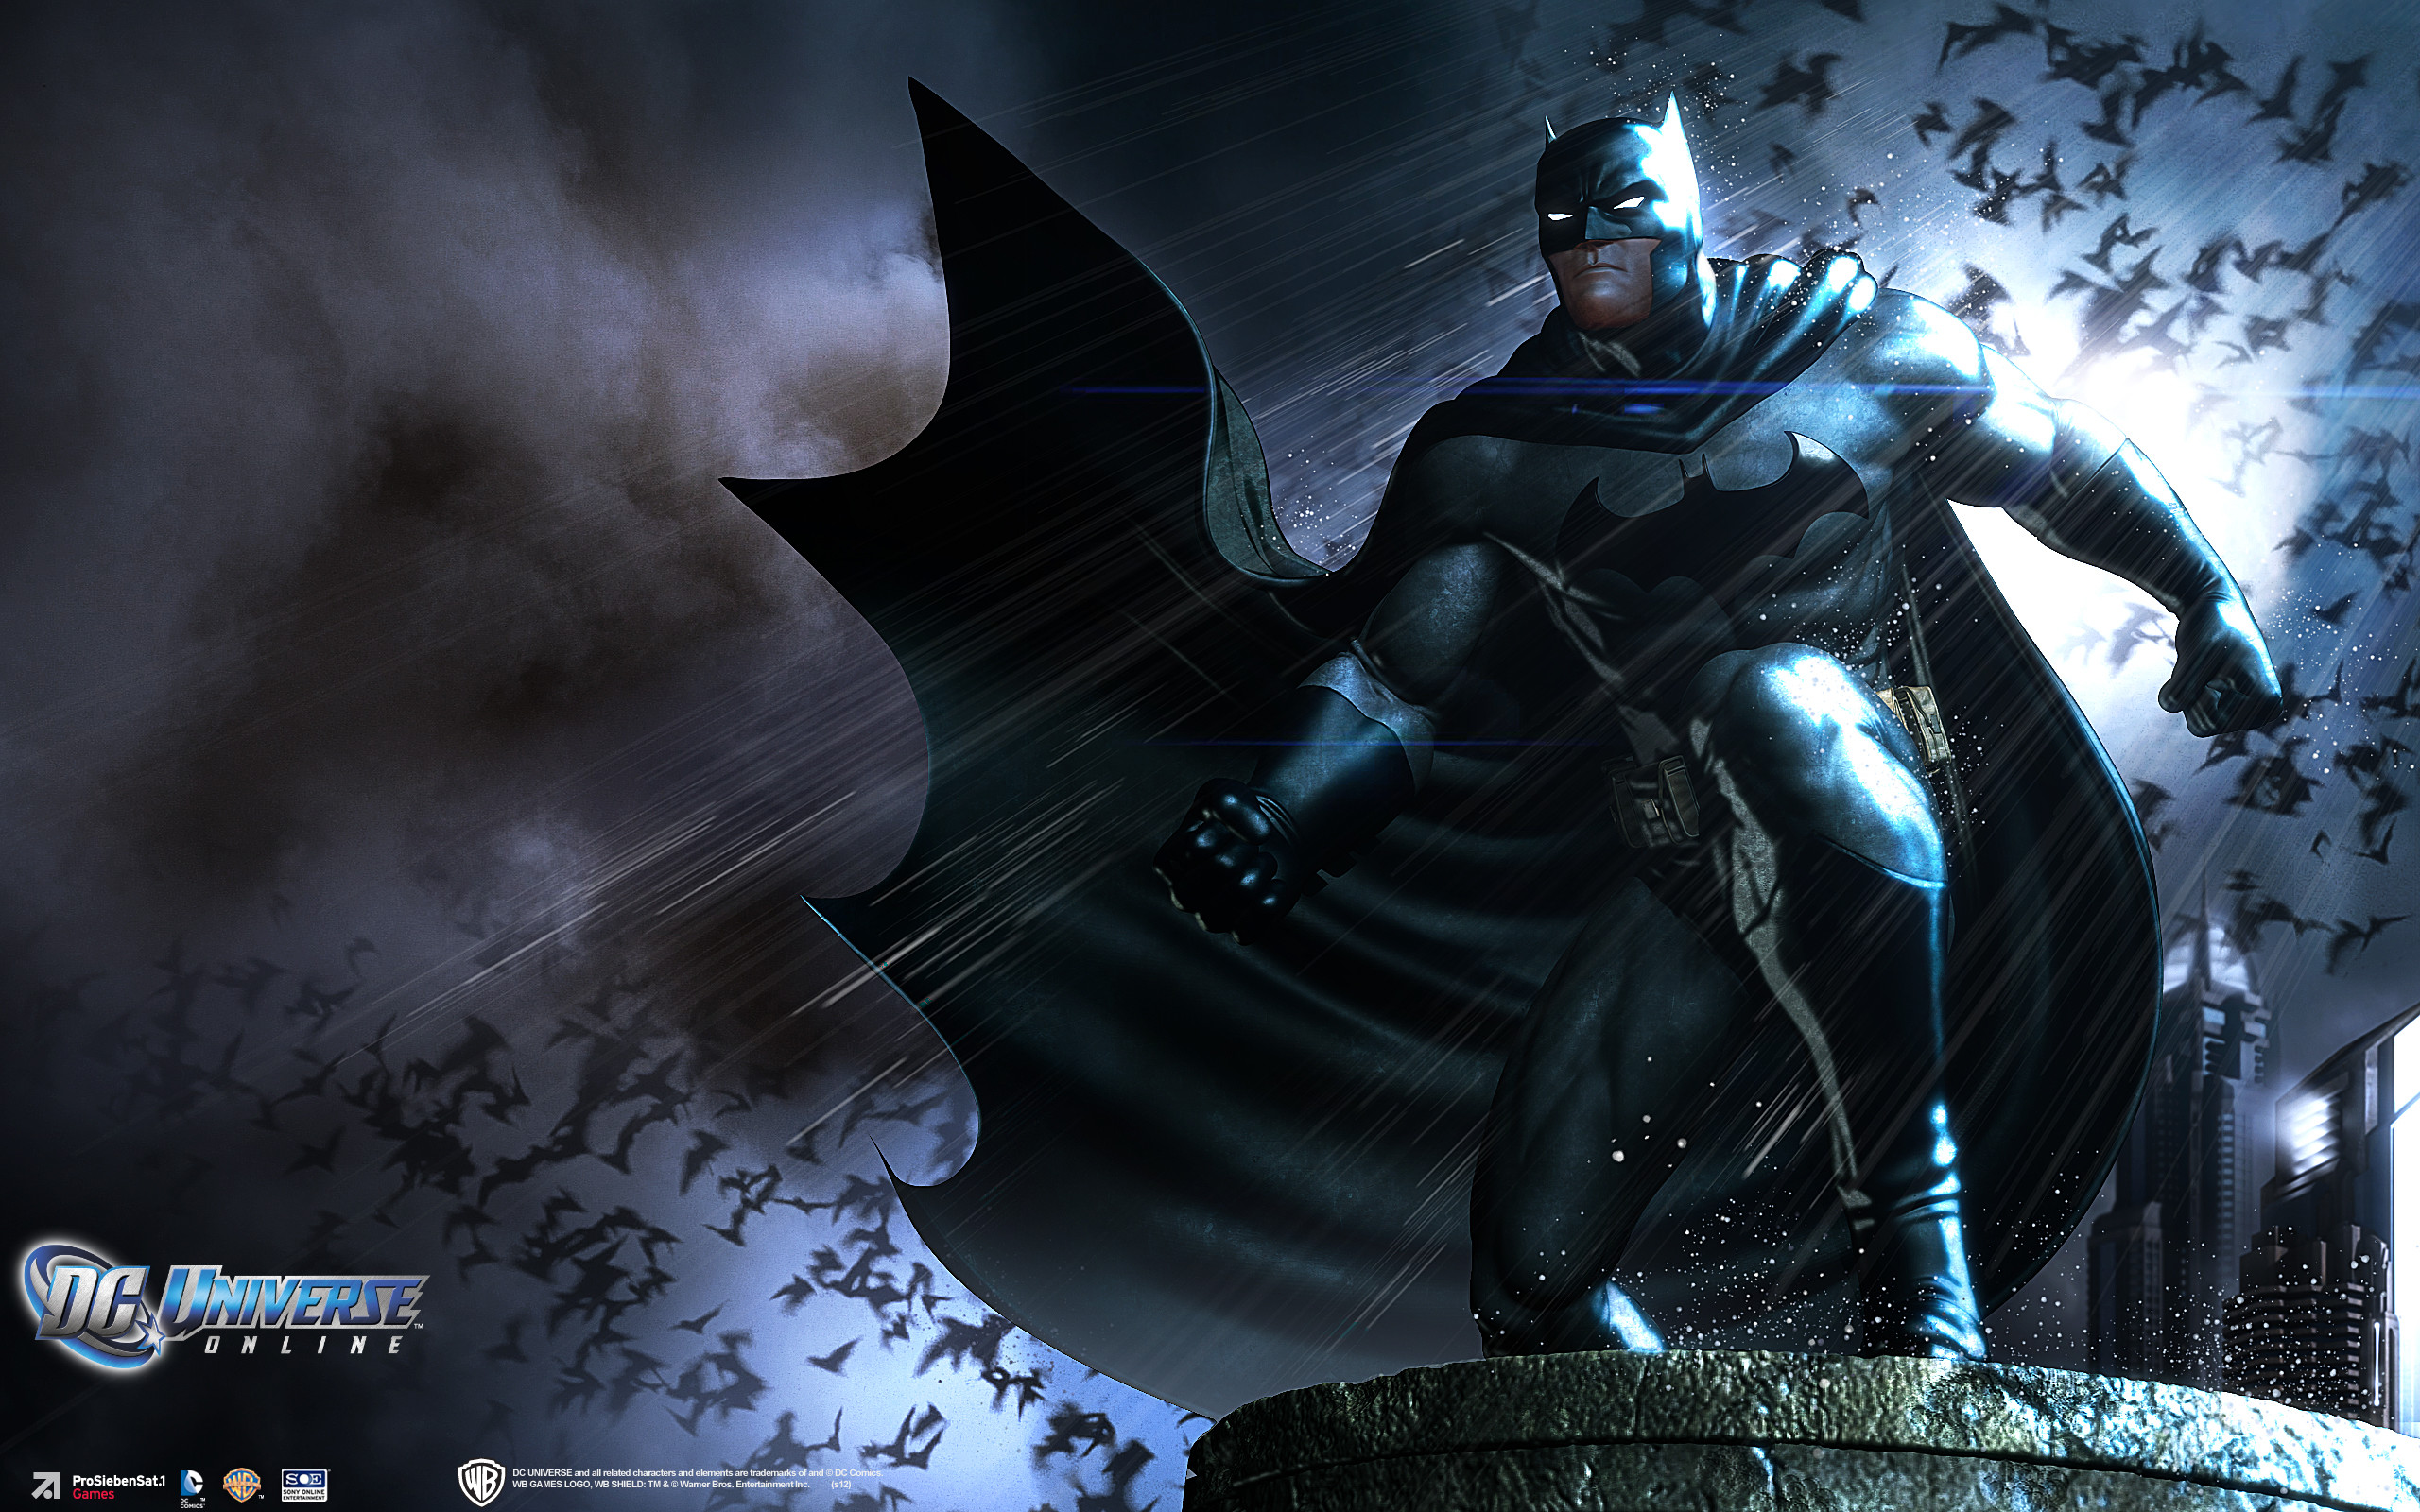 2560x1600 DC UNIVERSE ONLINE d-c superhero comics batman d wallpaper background